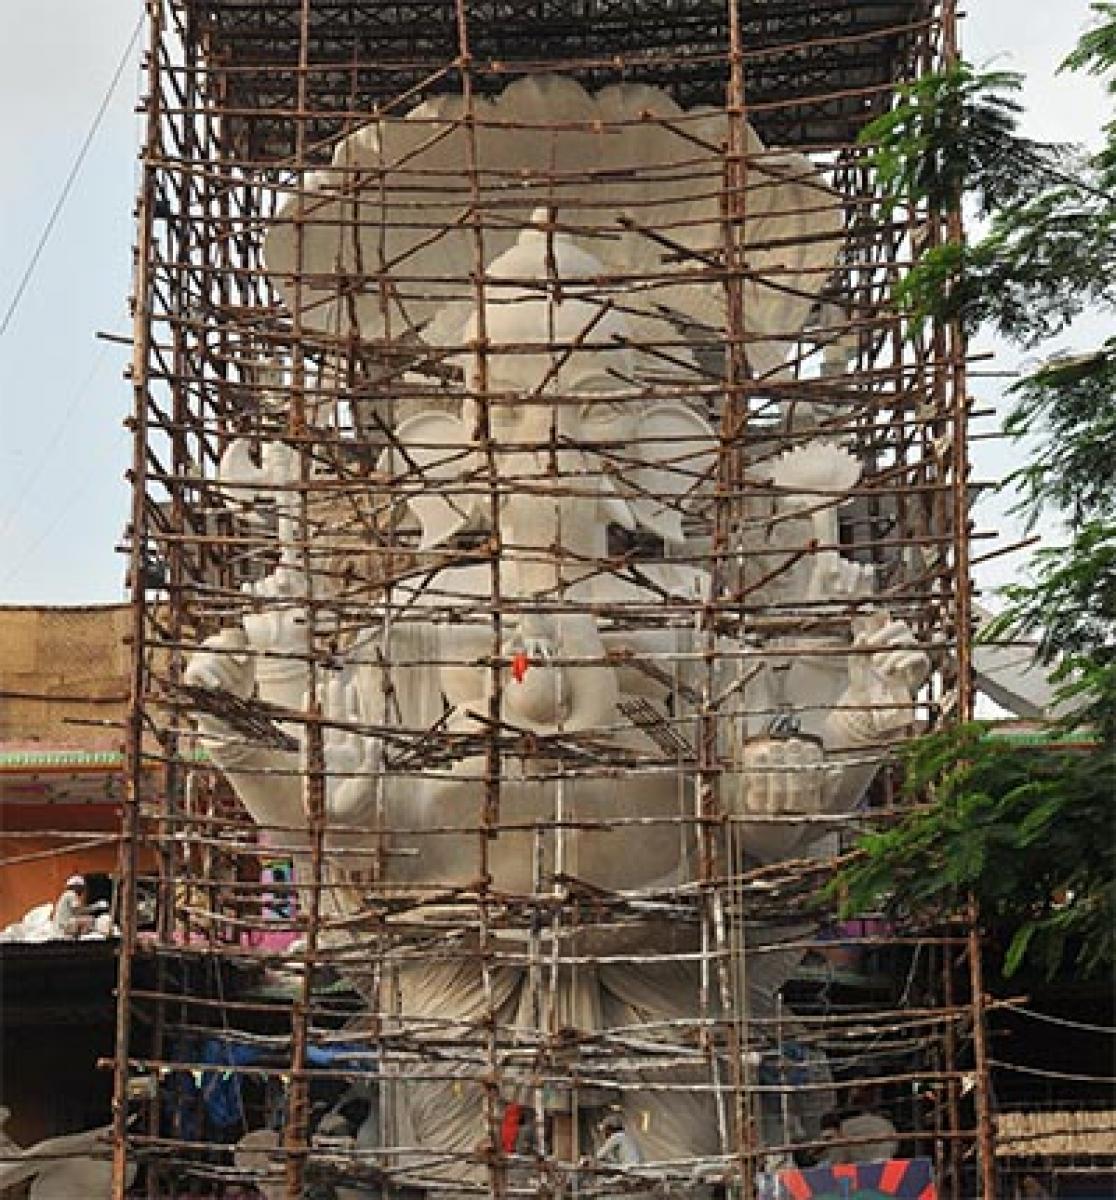 Thandava Ganesh set to beat Khairatabad idol